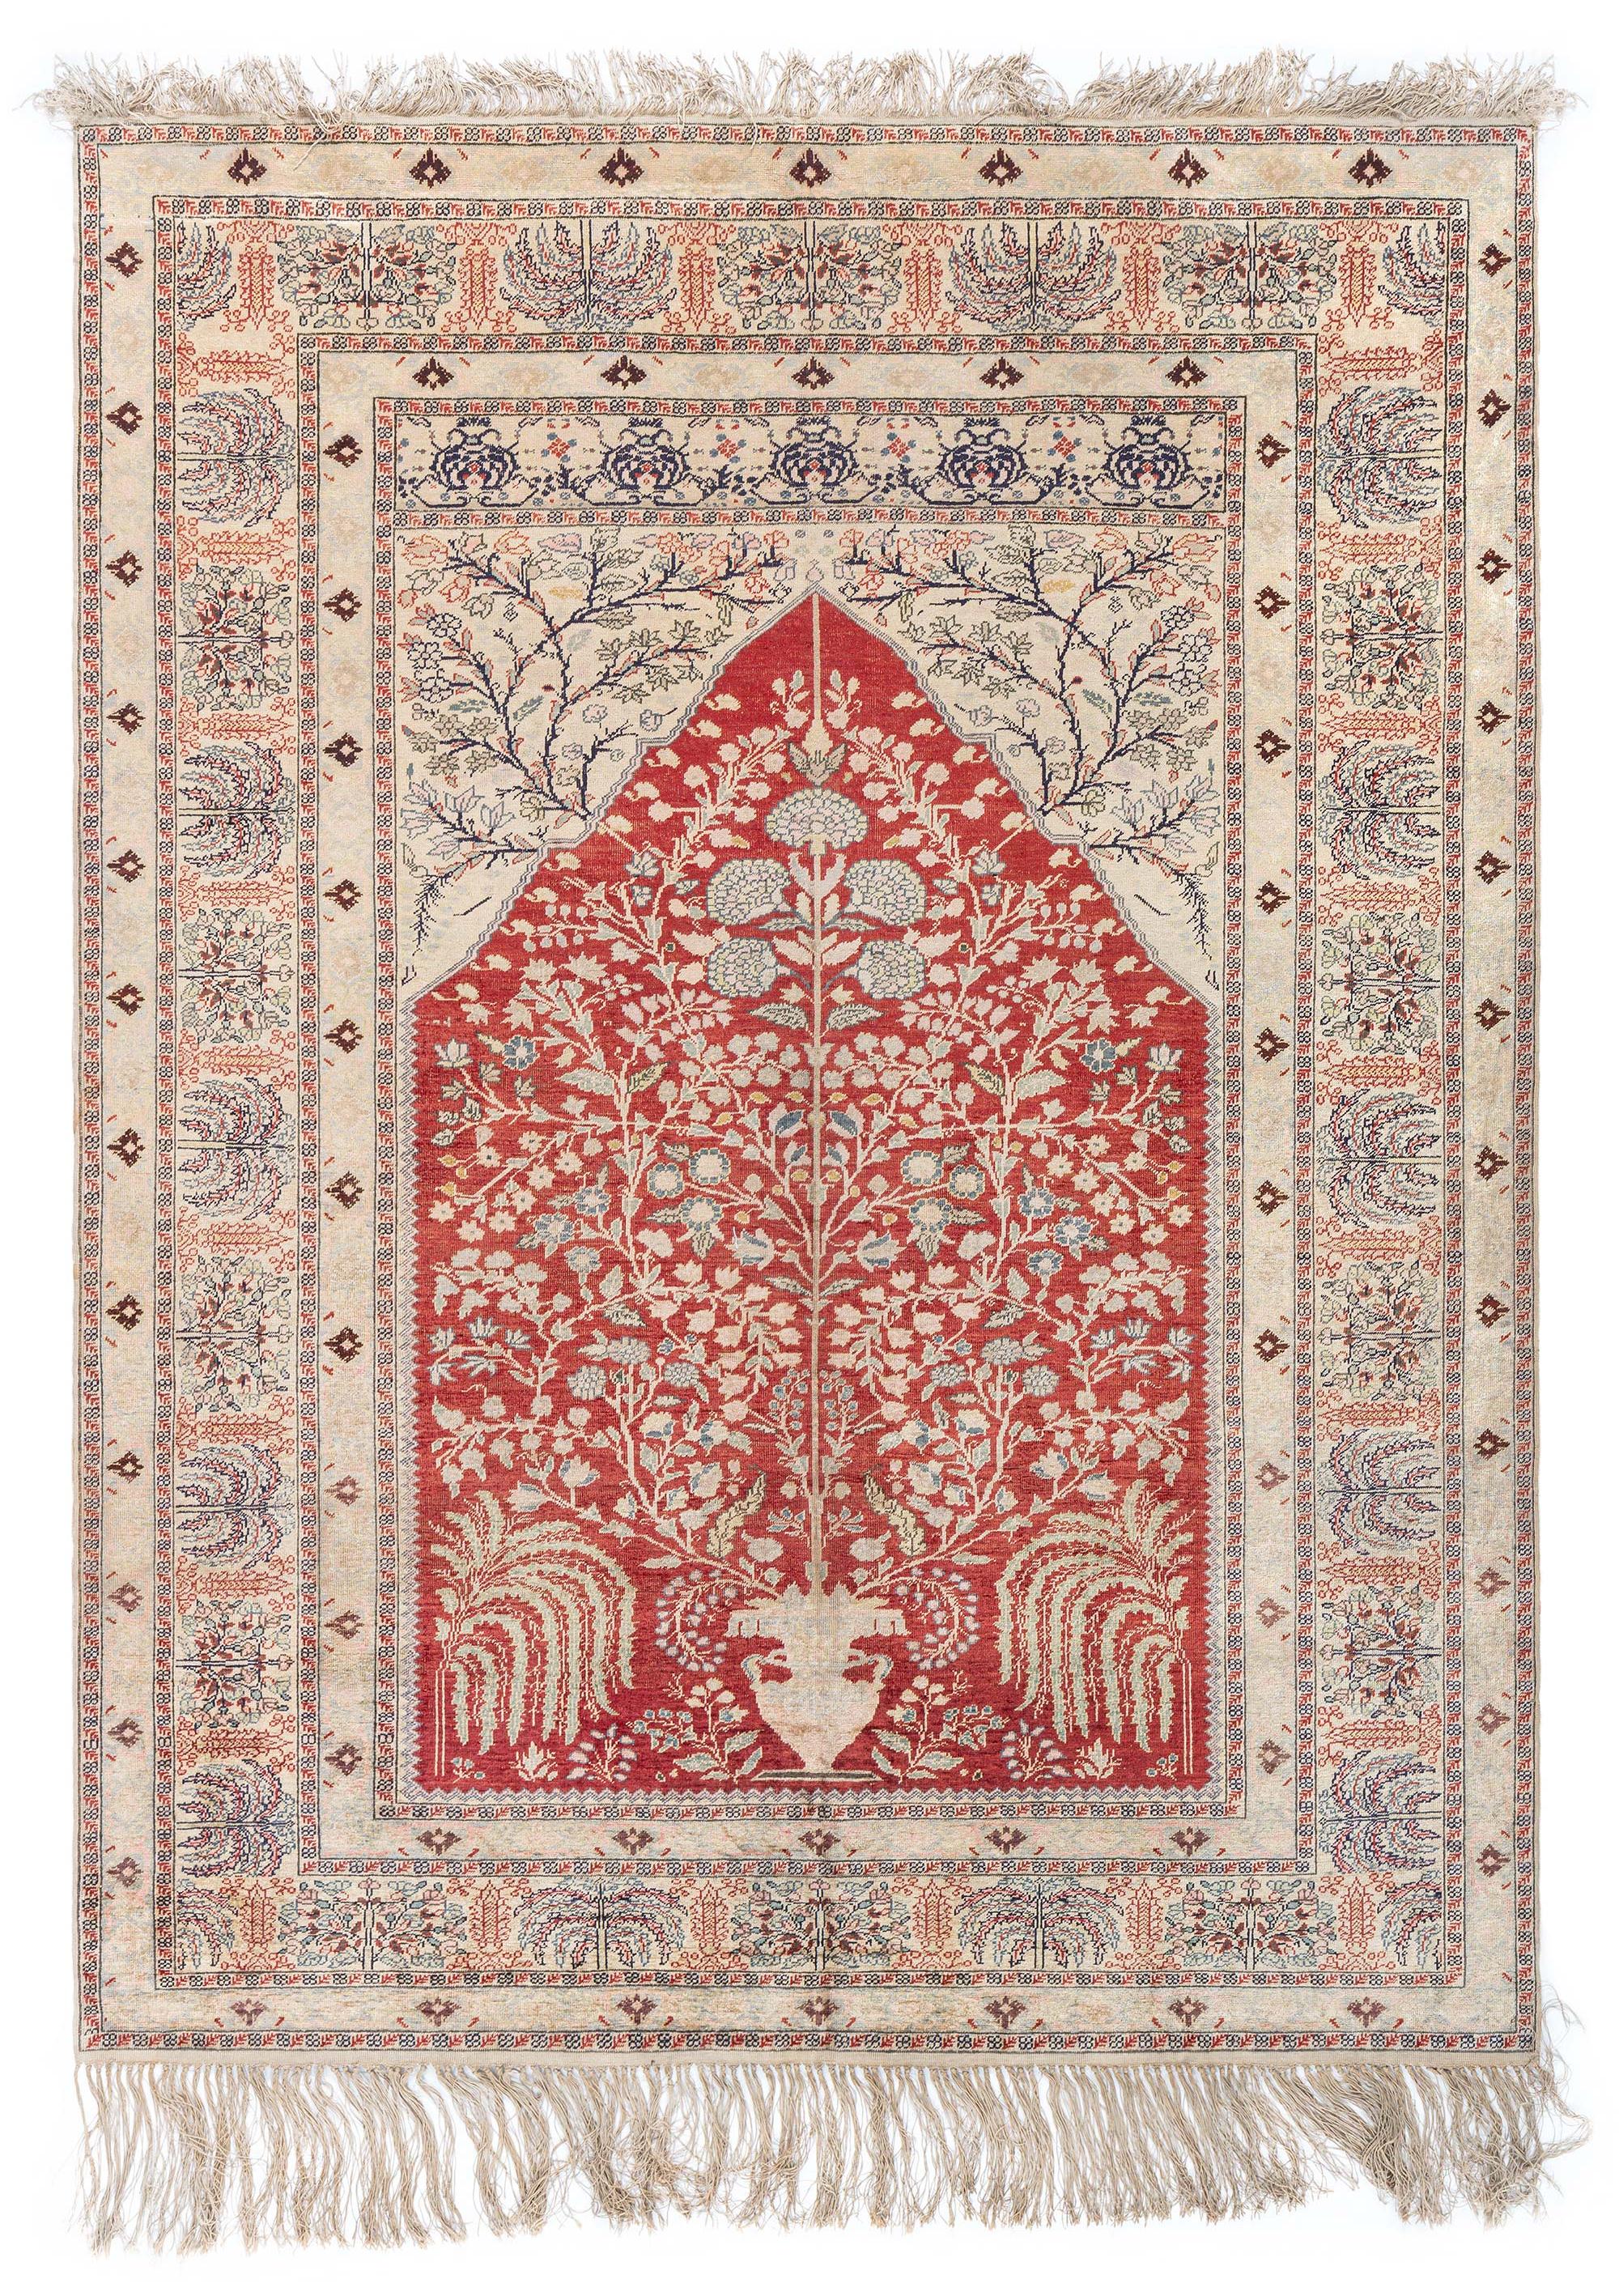 Early 20th Century Turkish Handmade Silk Rug